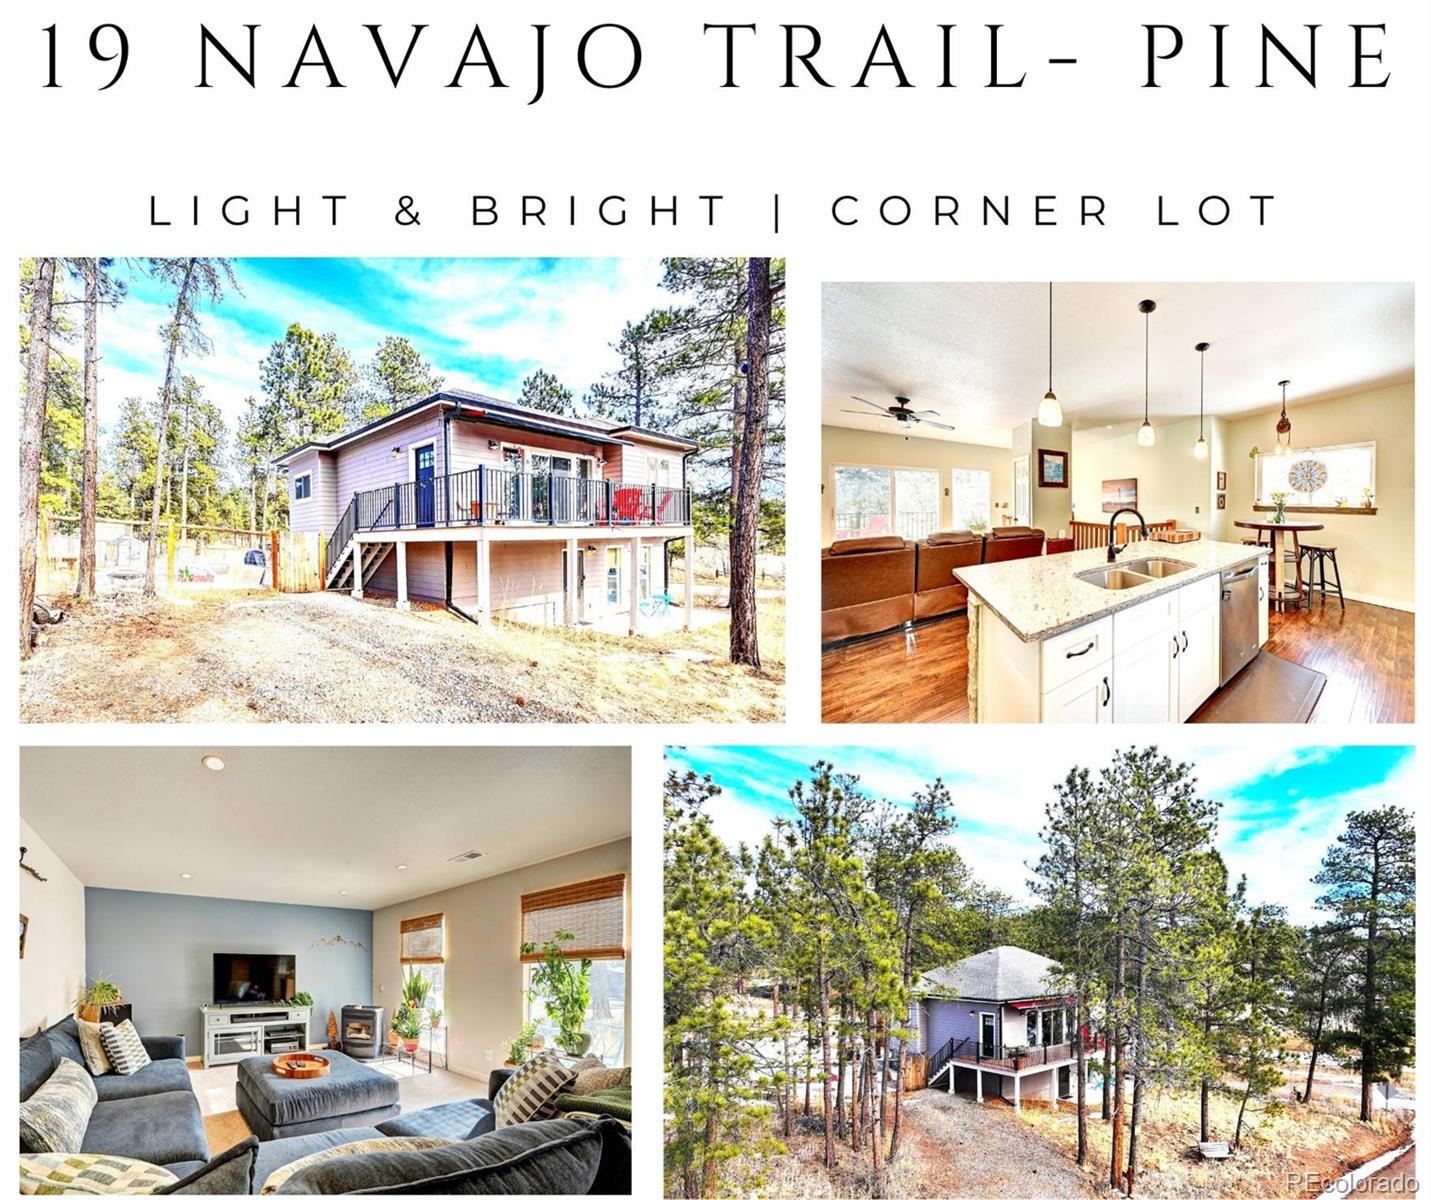 19  Navajo Trail, pine MLS: 7199197 Beds: 3 Baths: 2 Price: $629,000